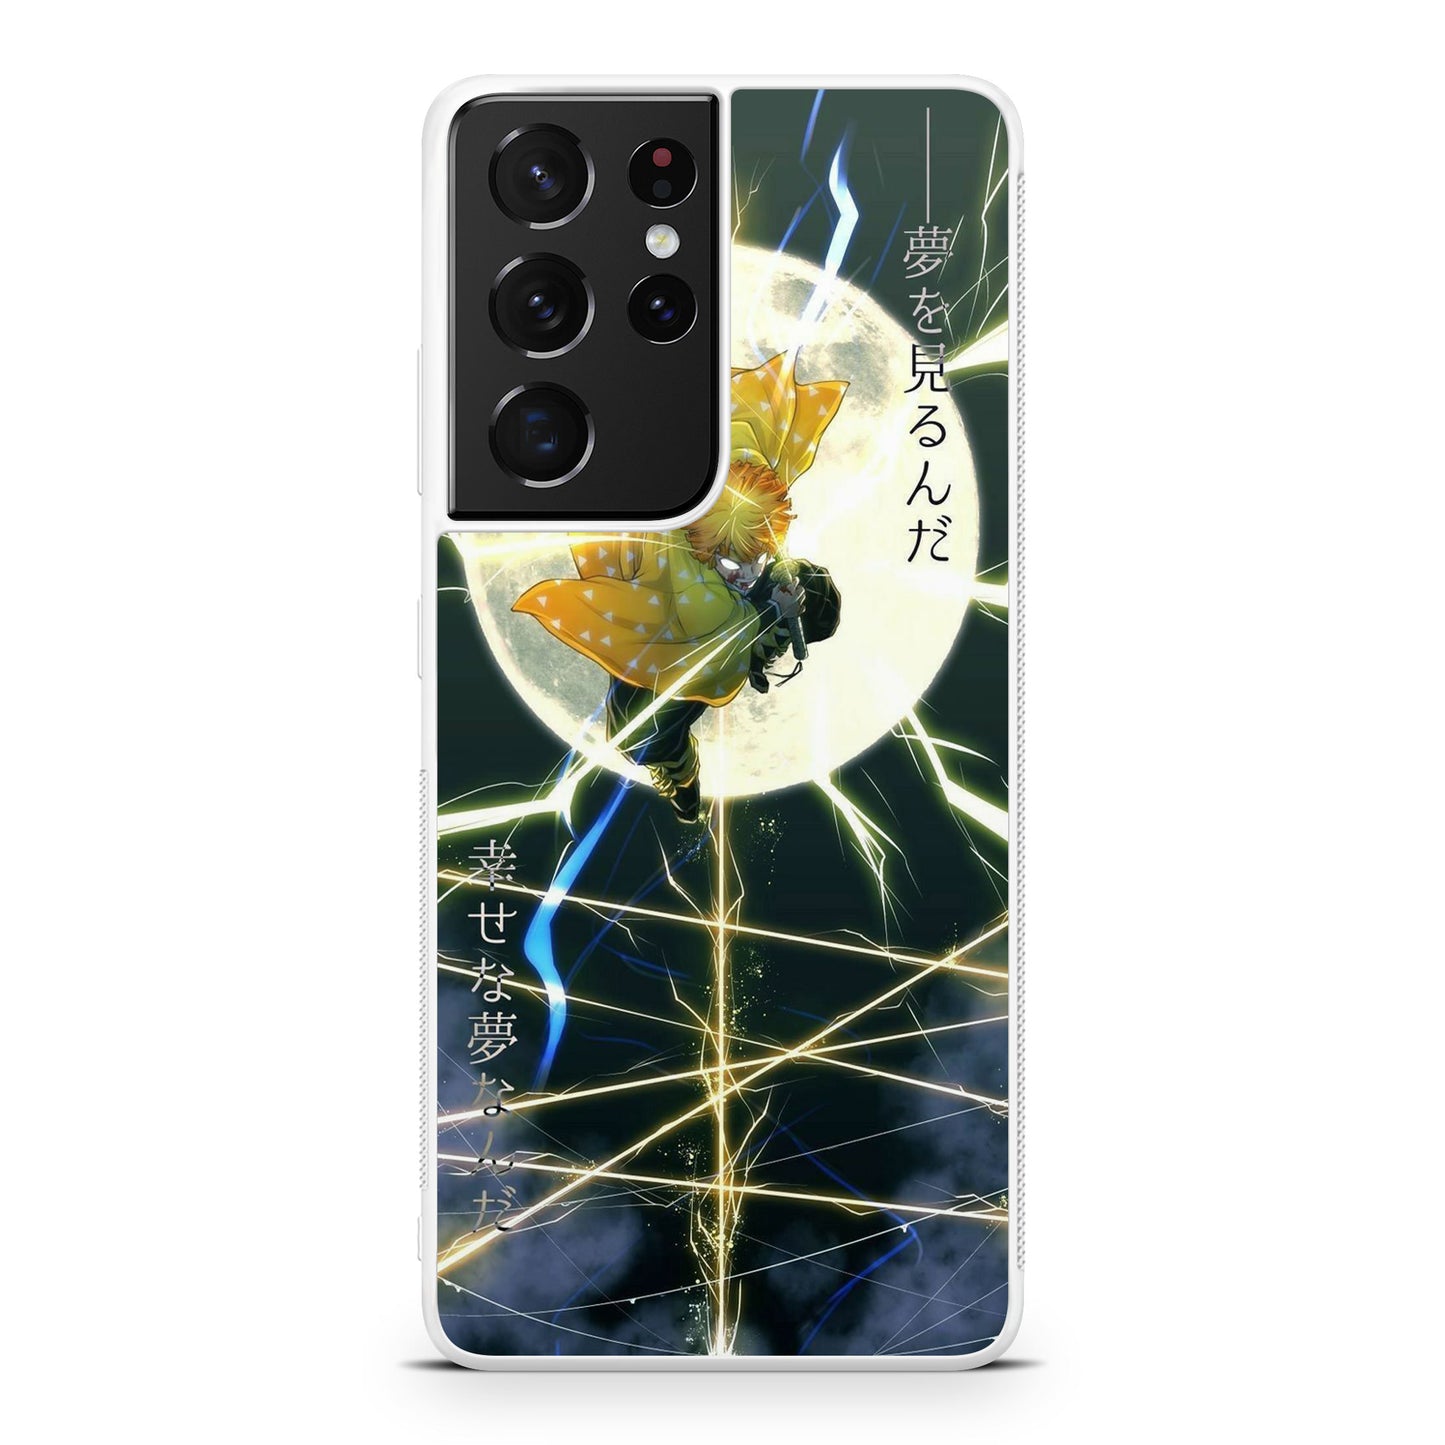 Zenittsu Galaxy S21 Ultra Case